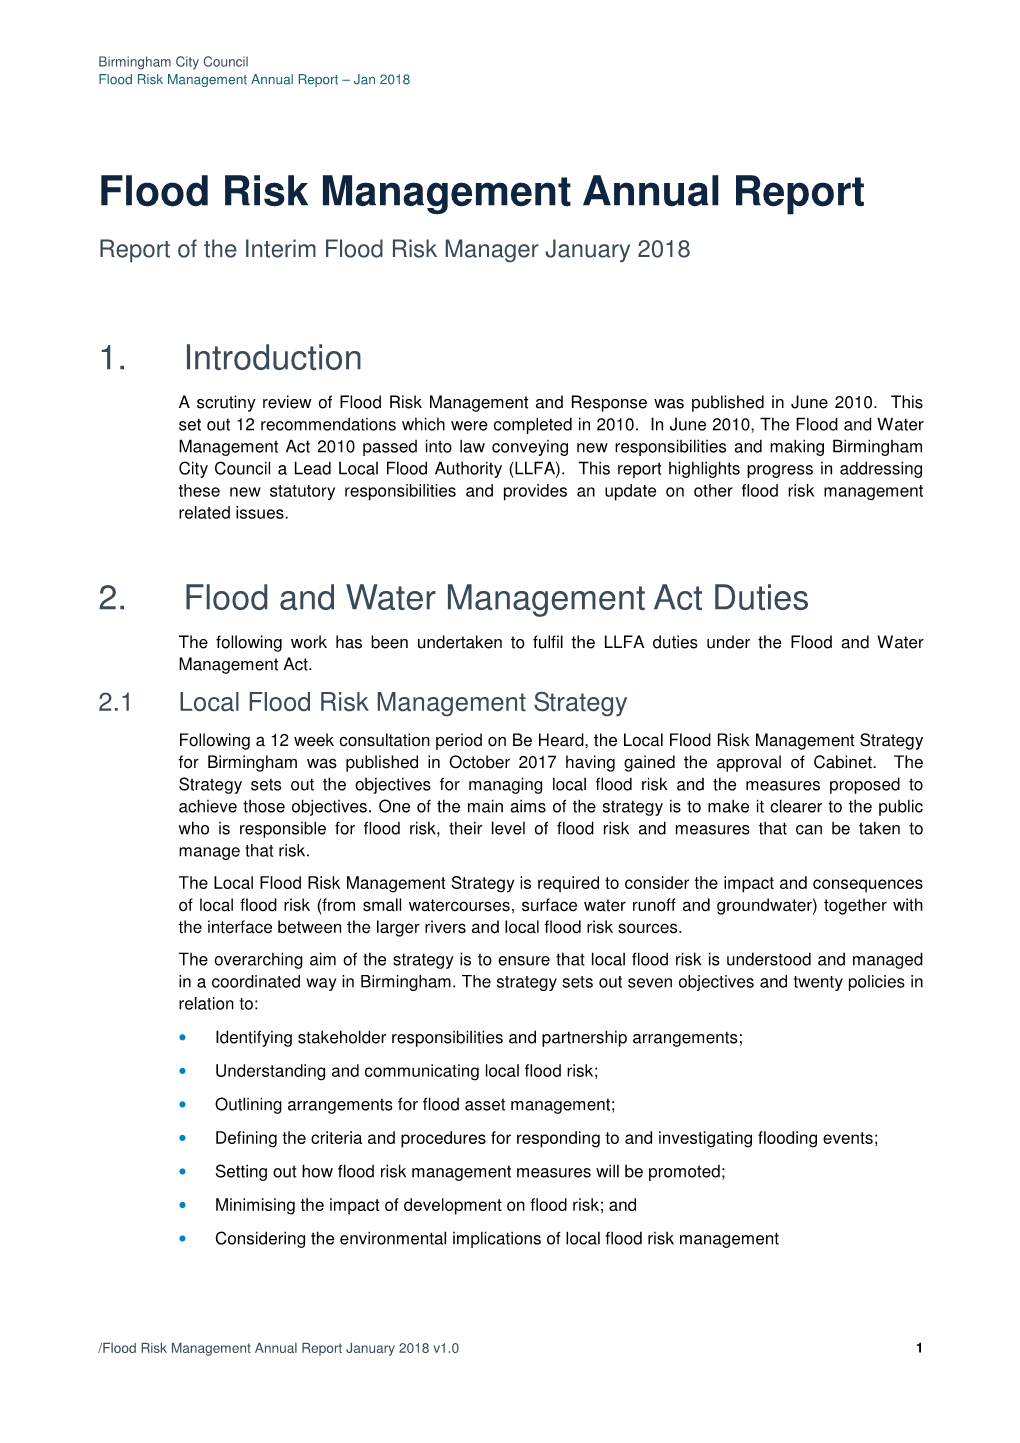 Flood Risk Management Annual Report – Jan 2018